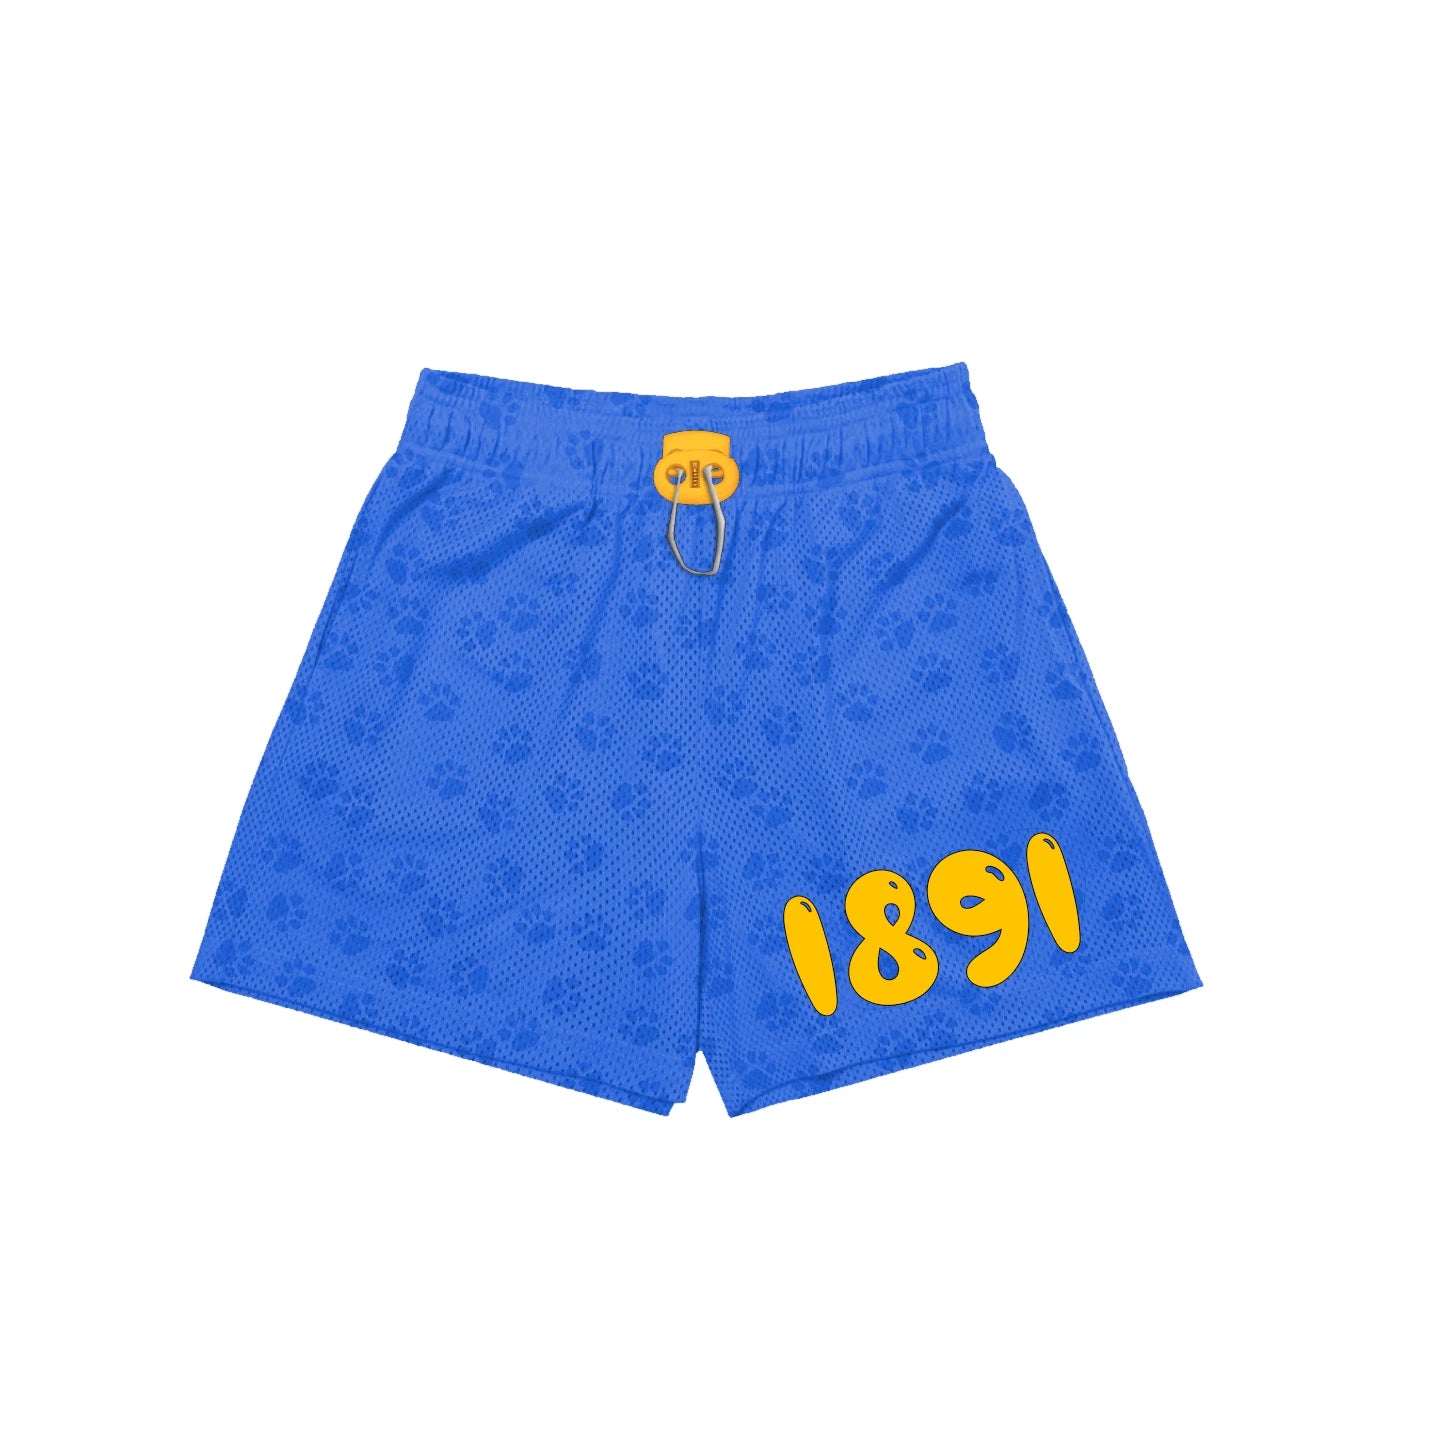 NC A&T 1891 Mesh Shorts